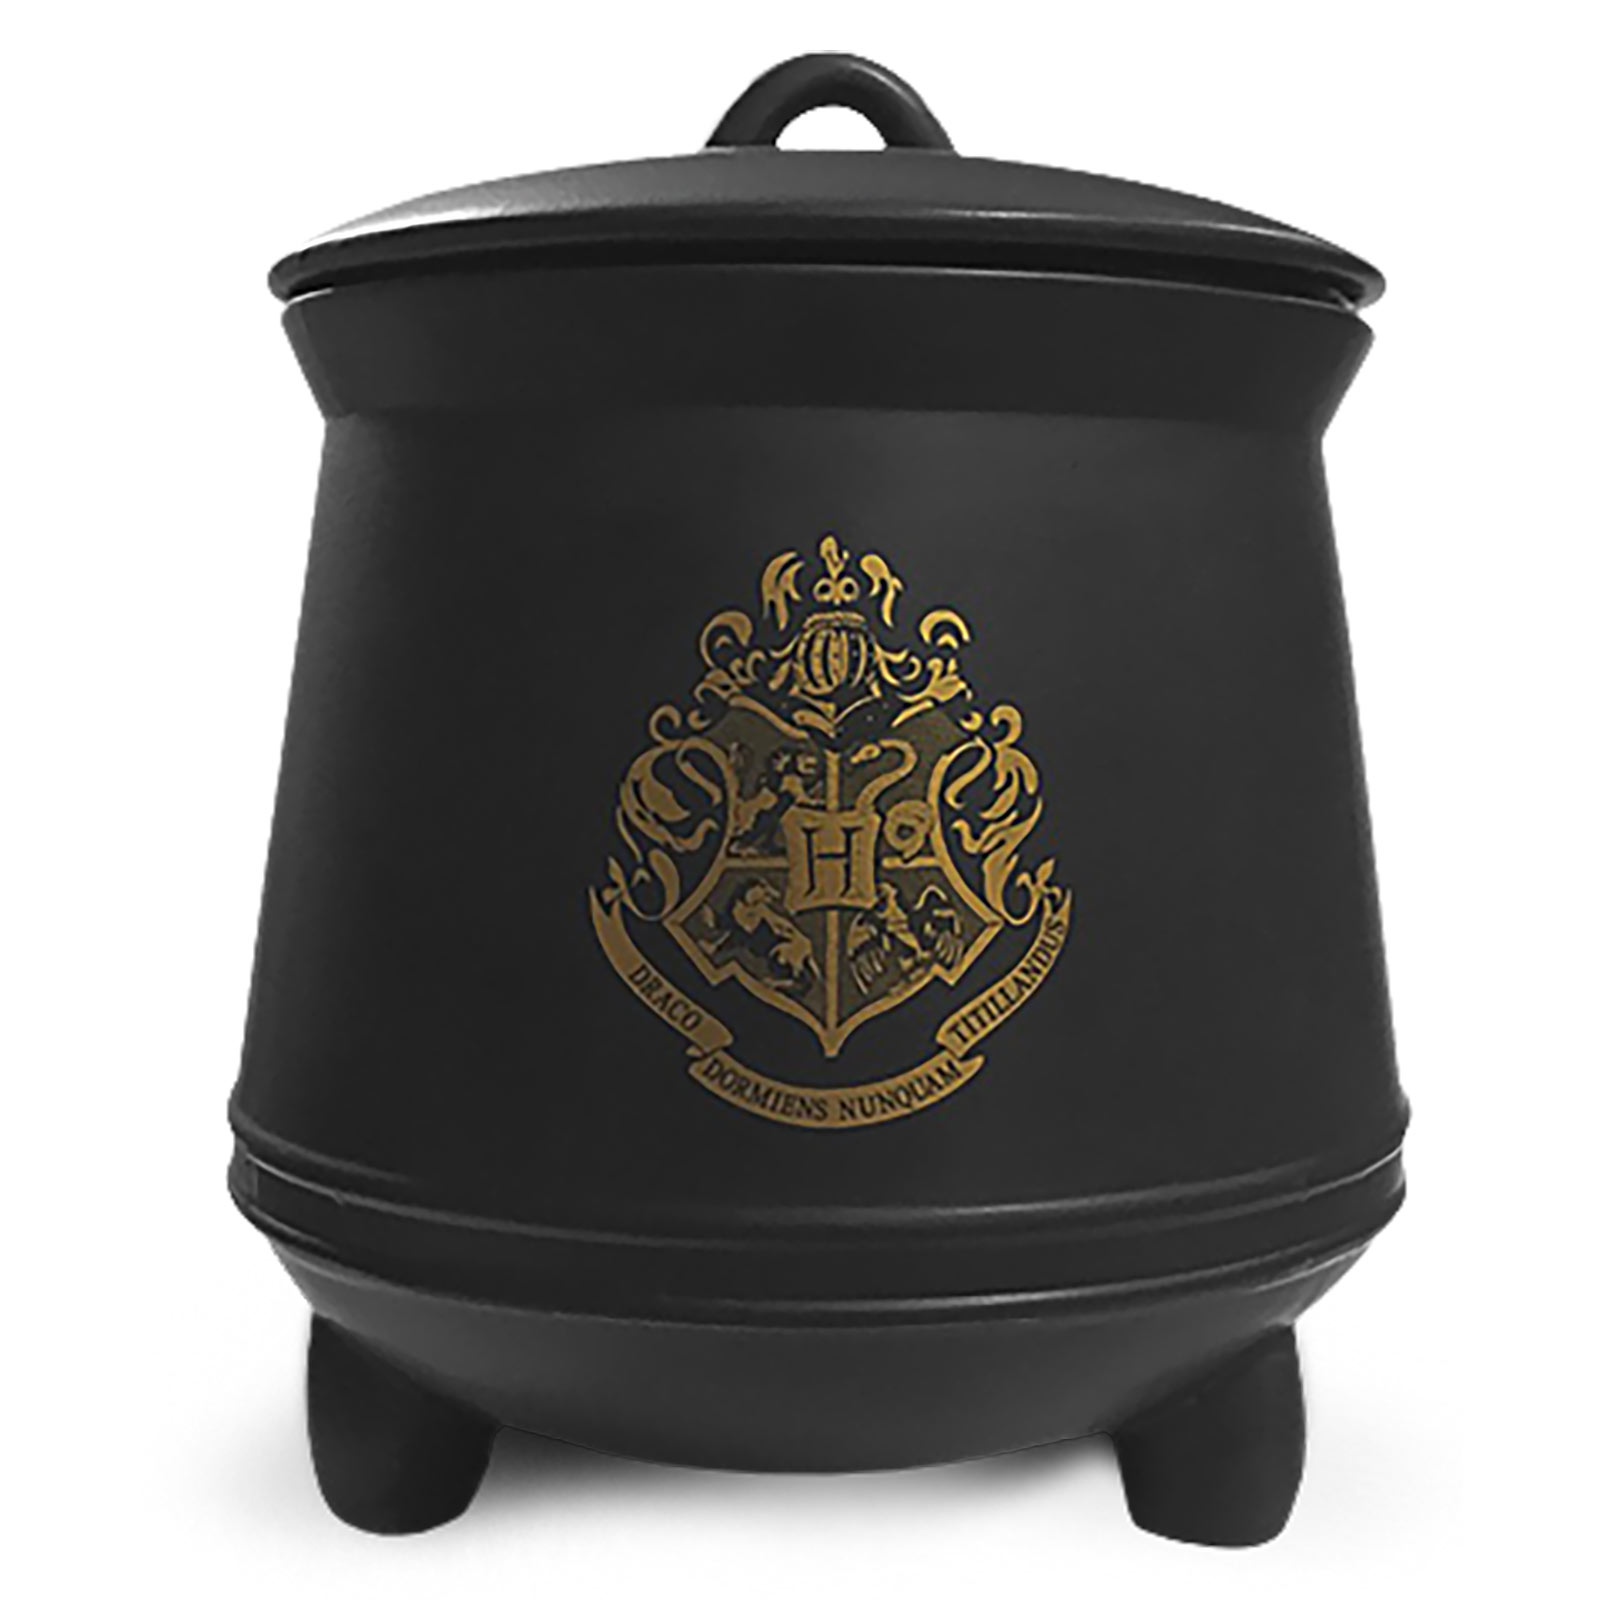 Harry Potter - Hogwarts Crest Cauldron Storage Jar